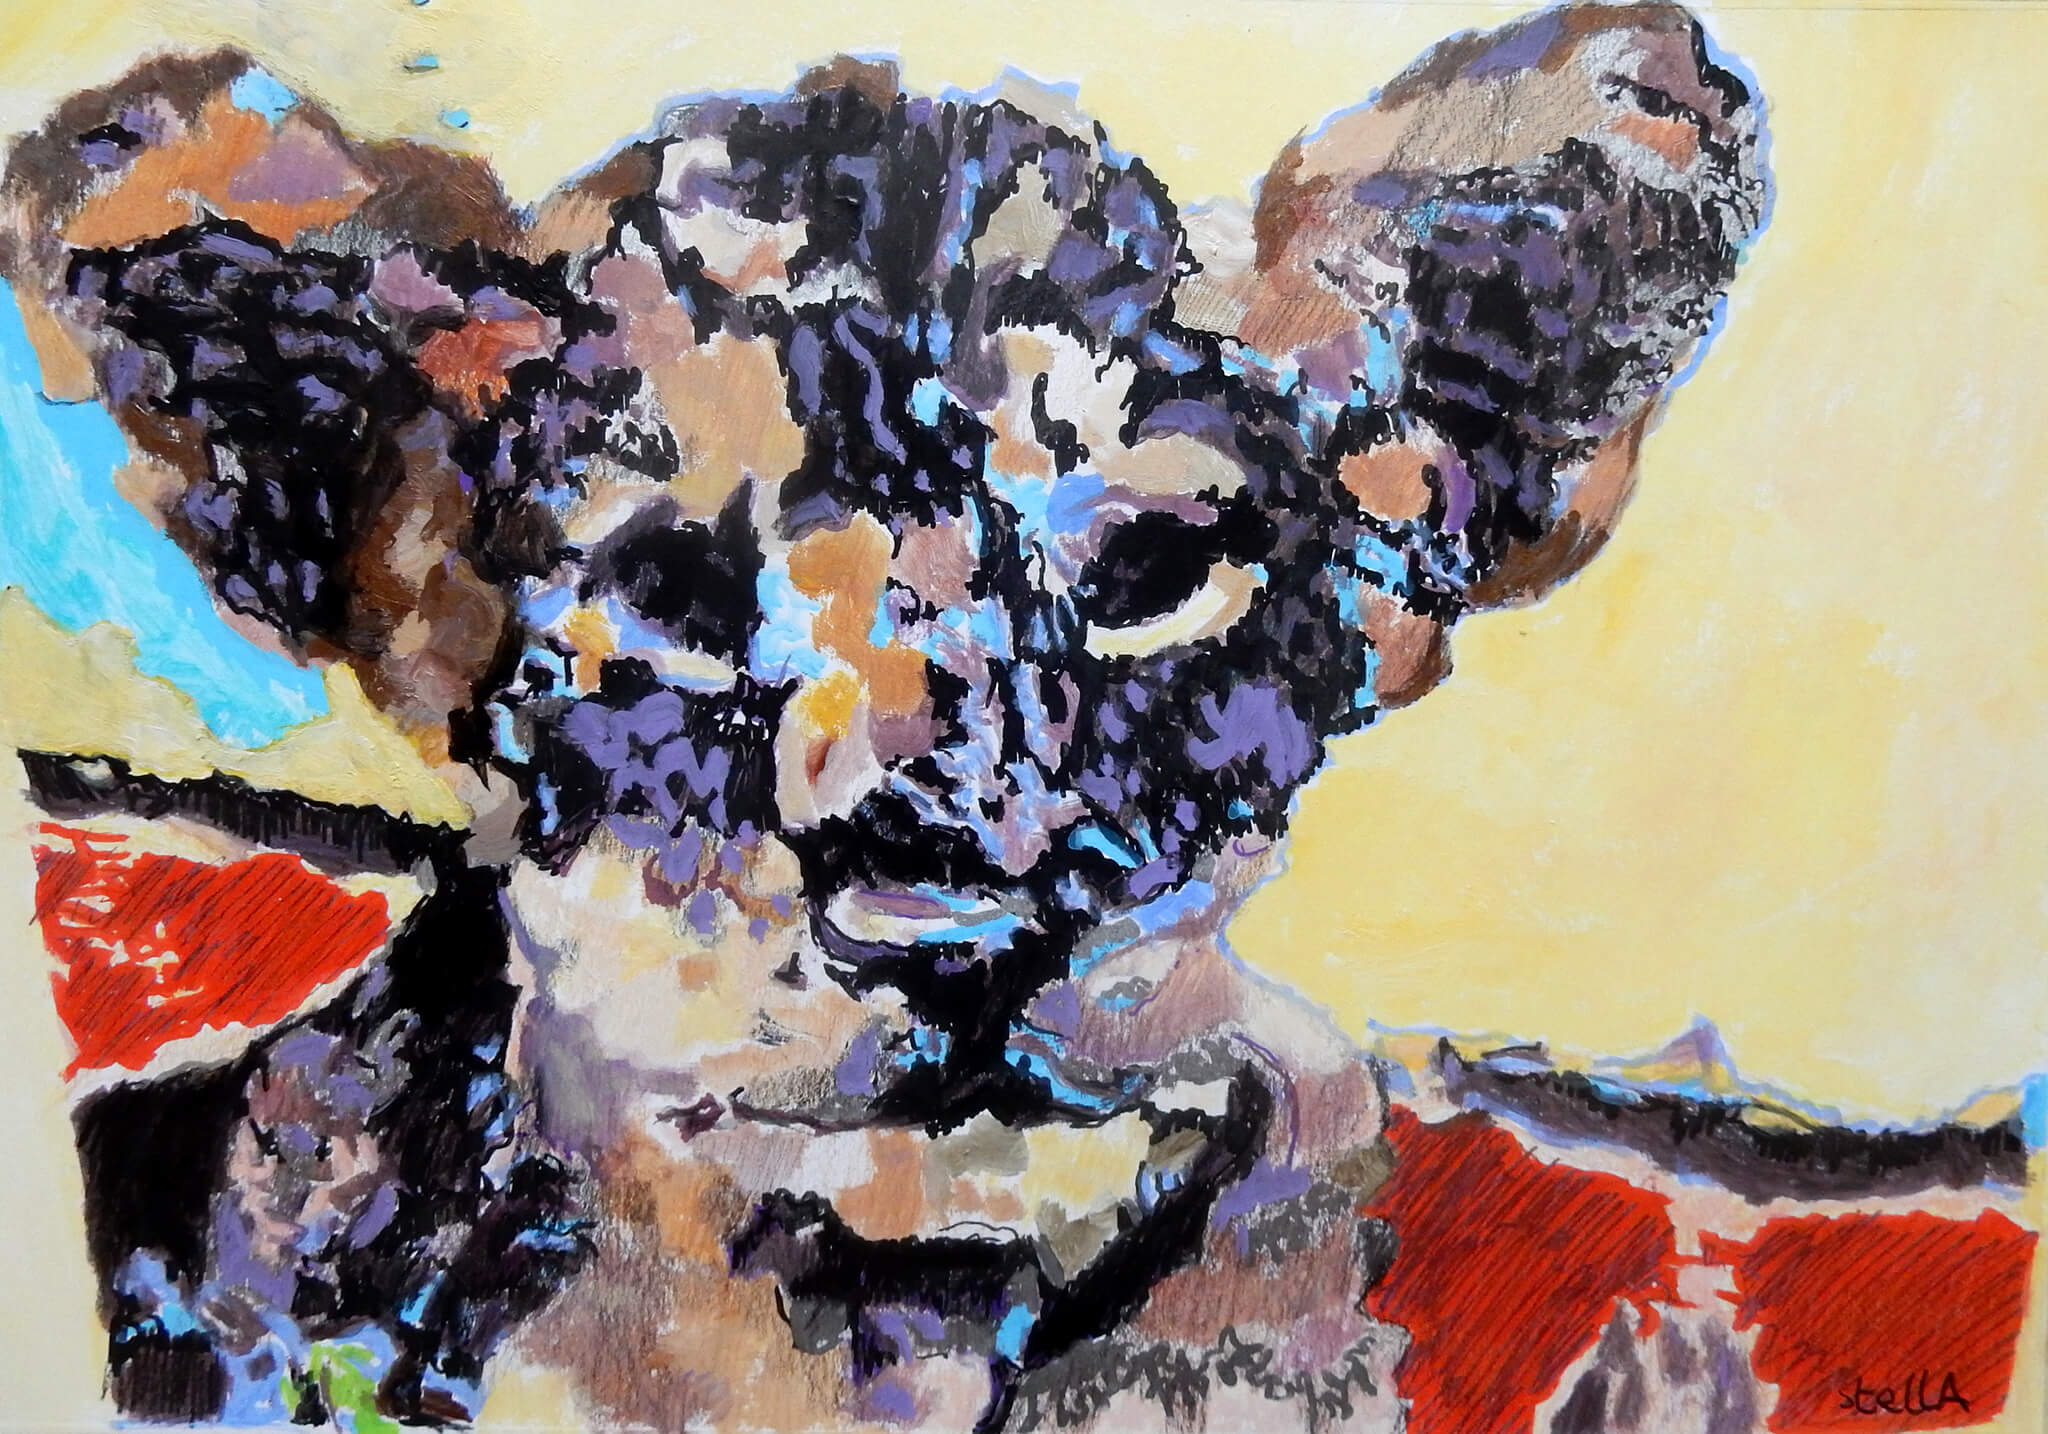 Thai tiger cub acrylic on paper animal portrait artwork by Stella Tooth.